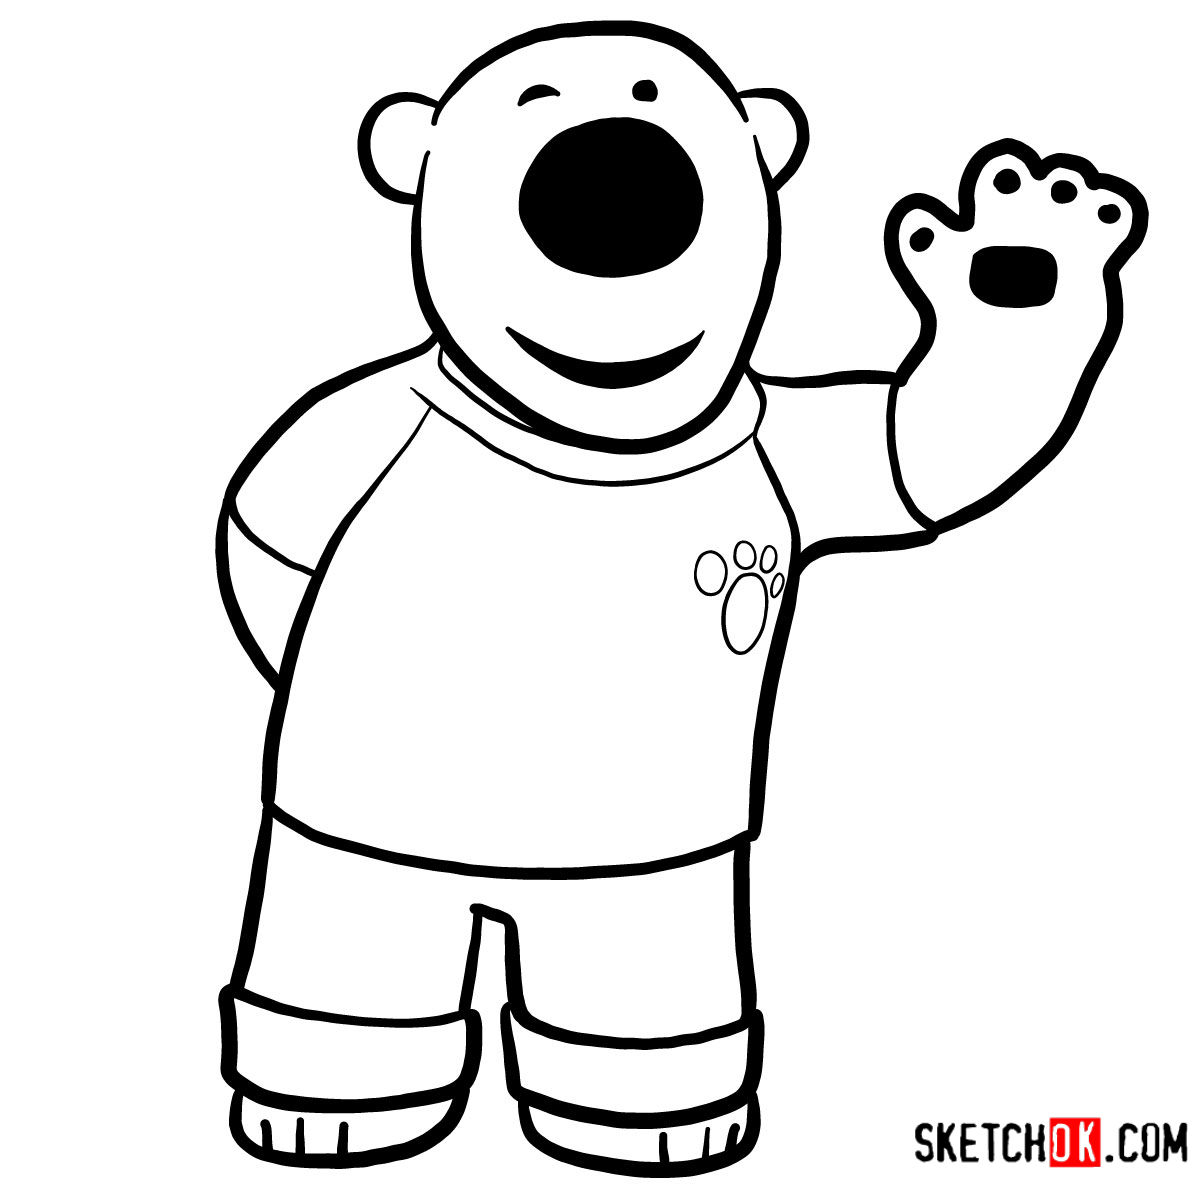 How to draw Poby the polar bear | Pororo